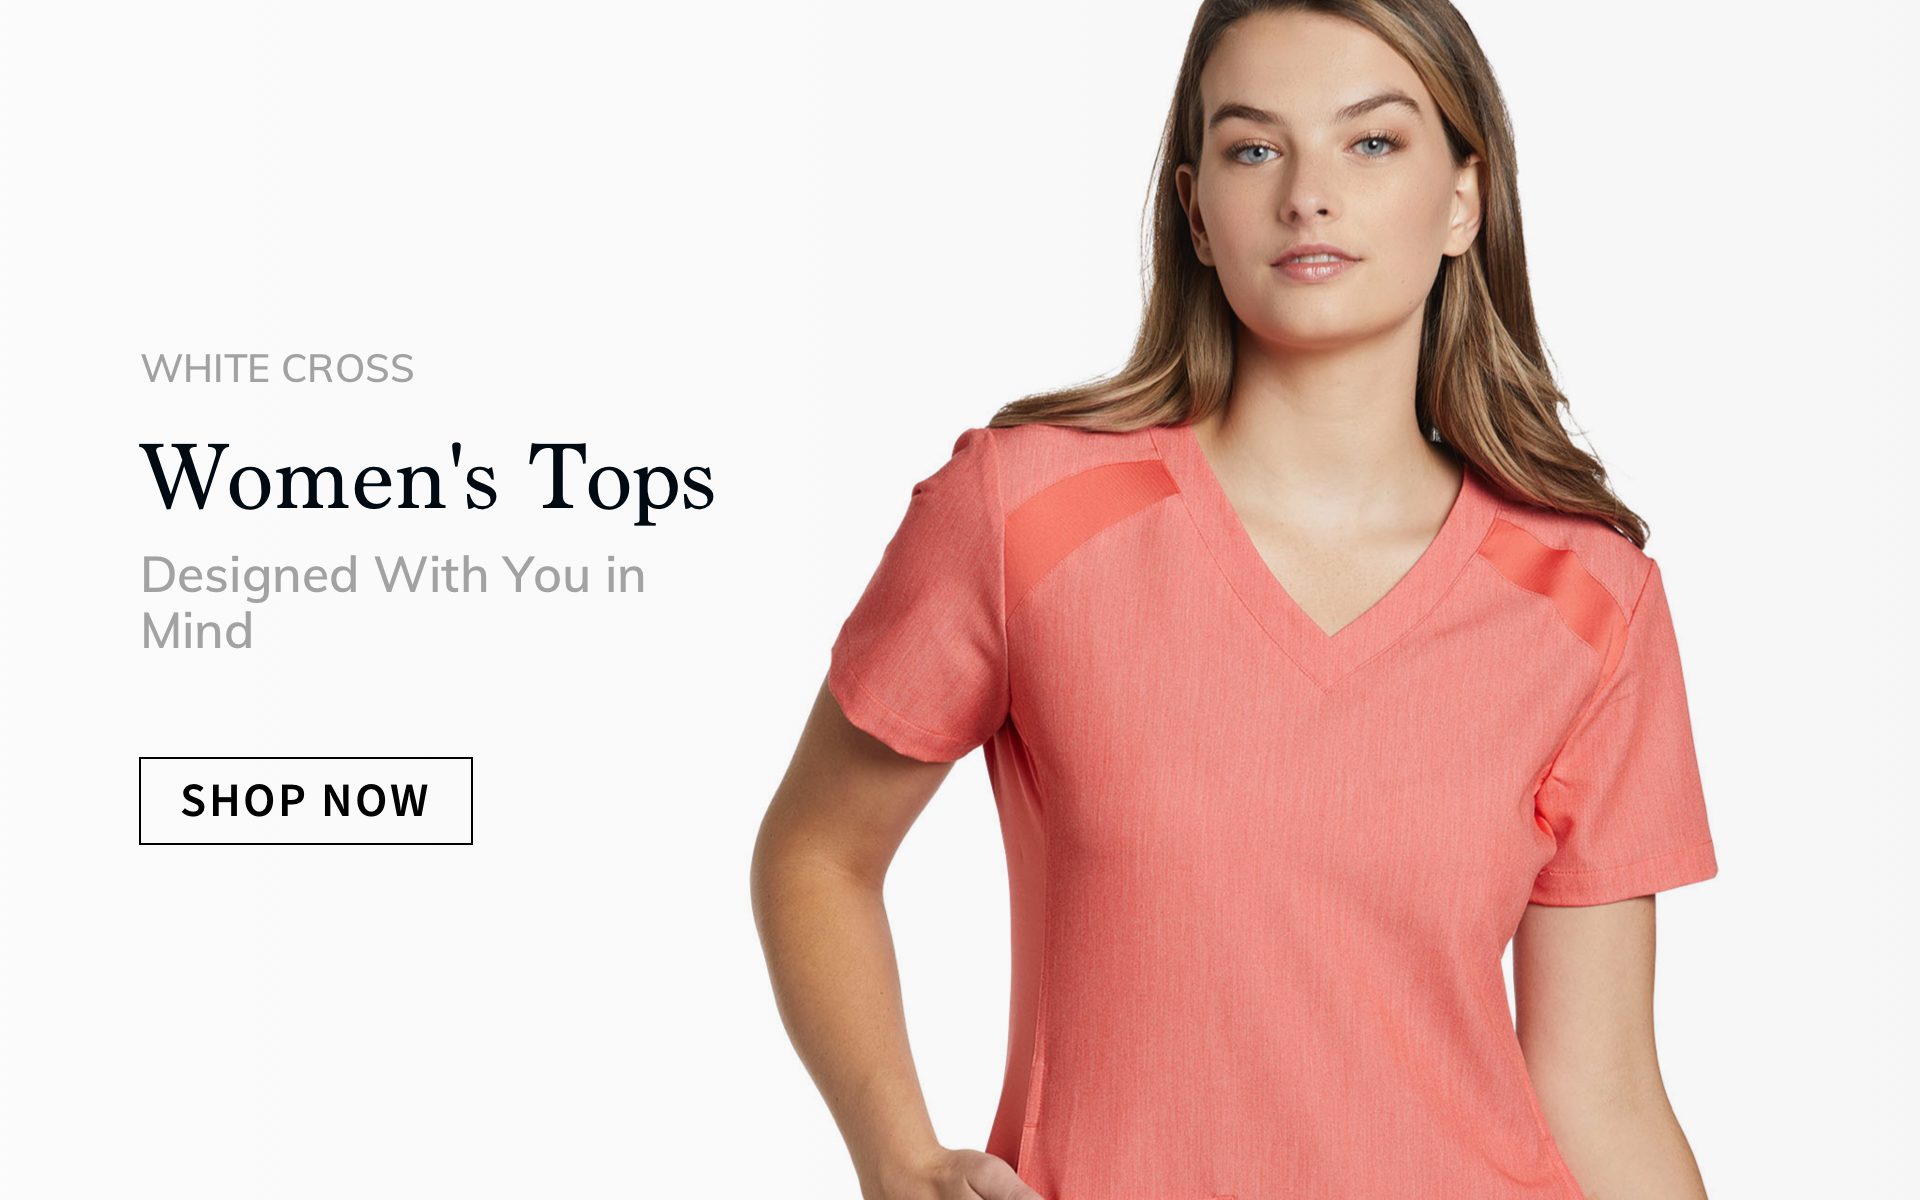 click to shop white cross women's tops.